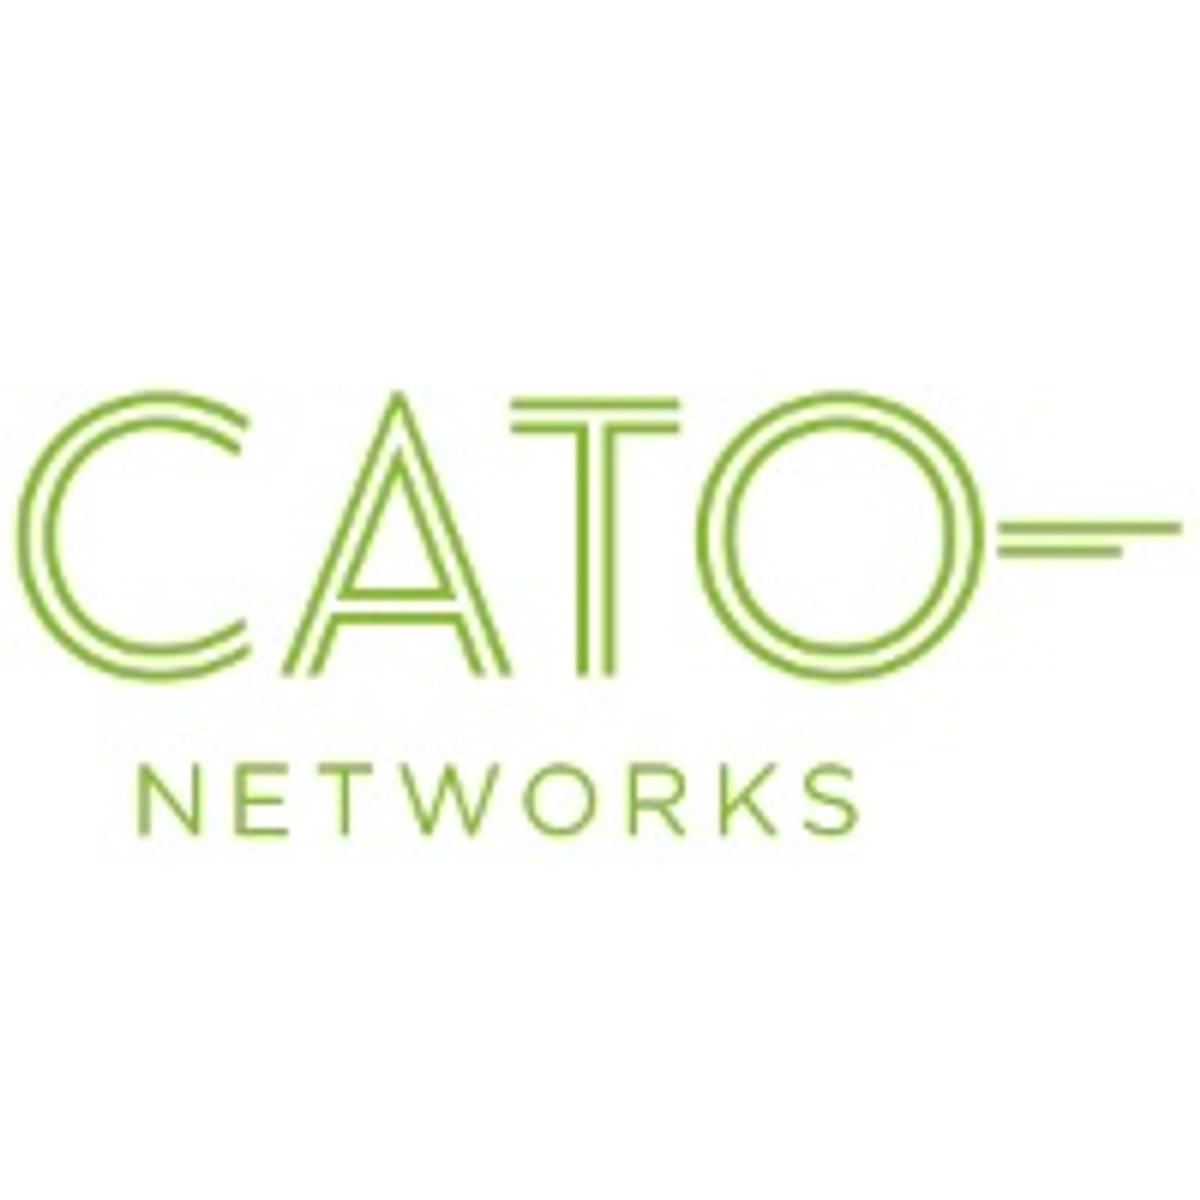 Cato Networks Secure SD-WAN seminar image